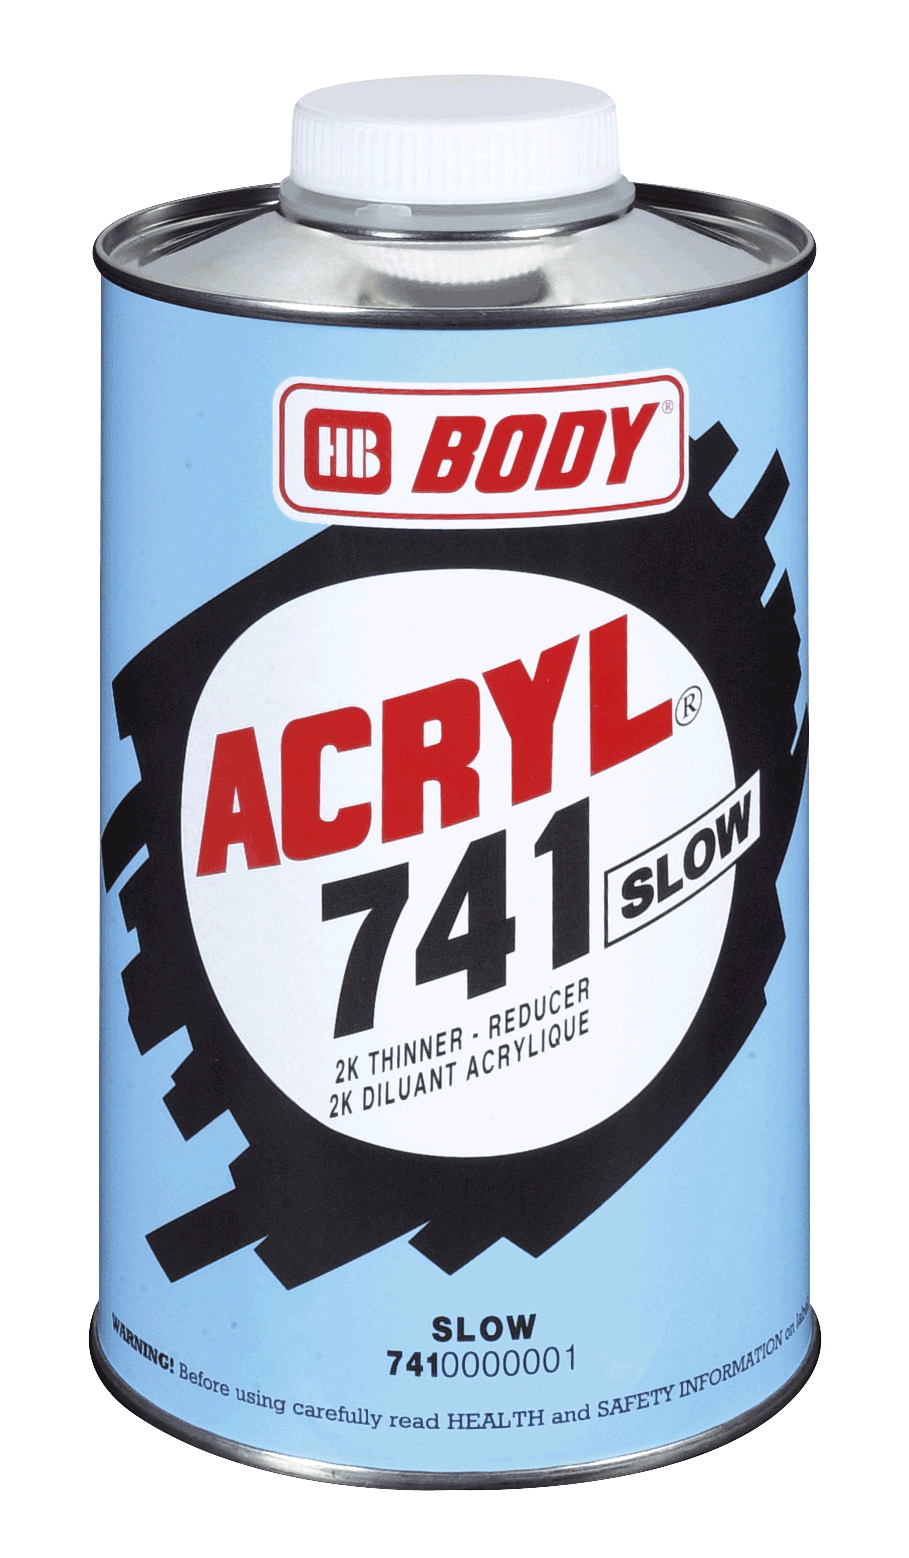 E-shop HB BODY Body 741 Acryl thinner slow 1L